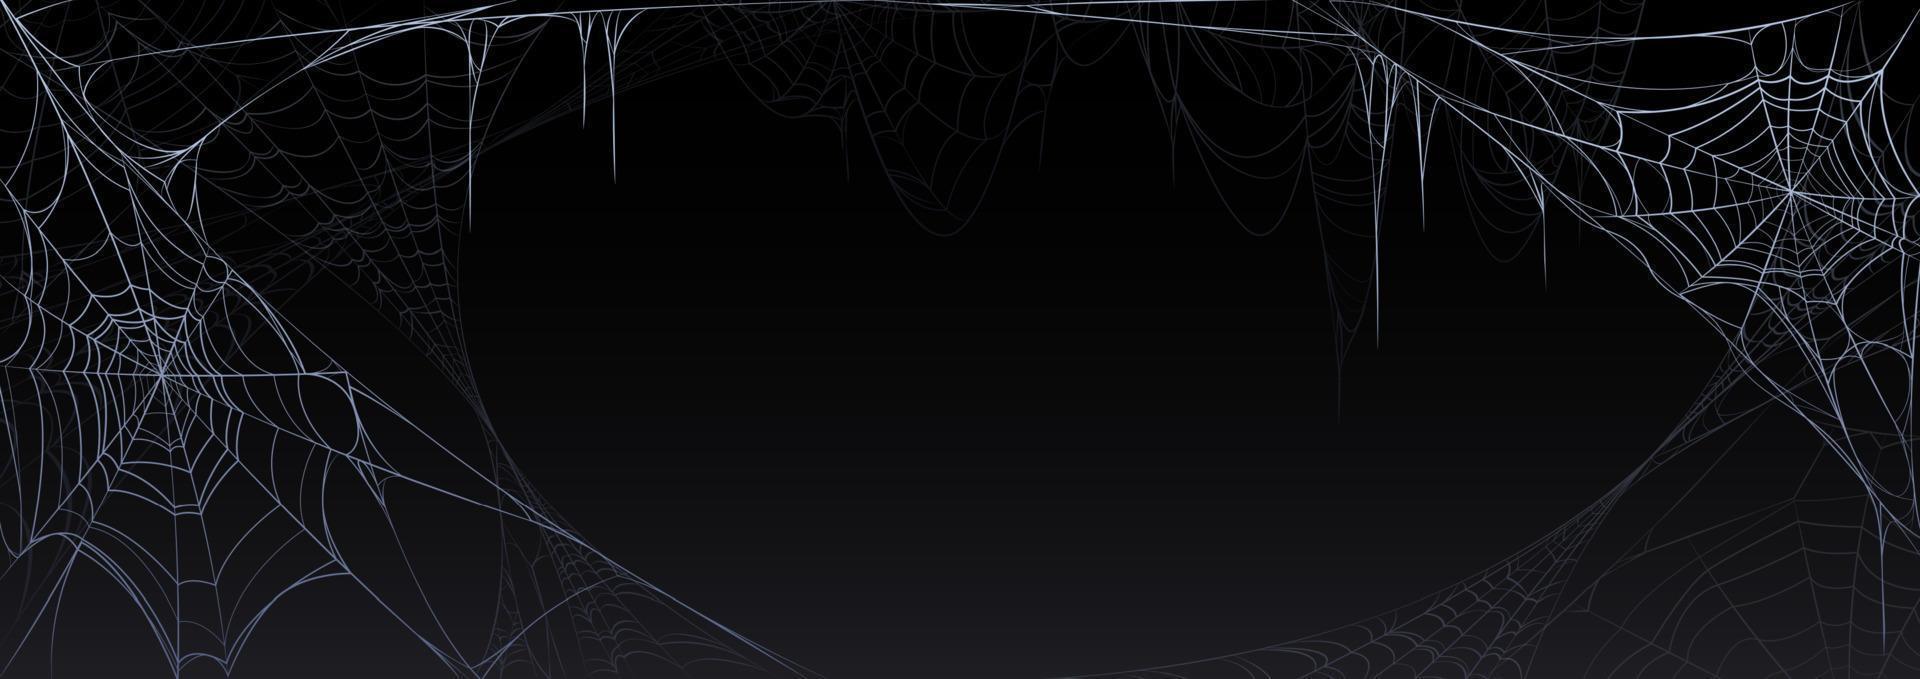 realistisk Spindel webb isolerat på svart bakgrund vektor